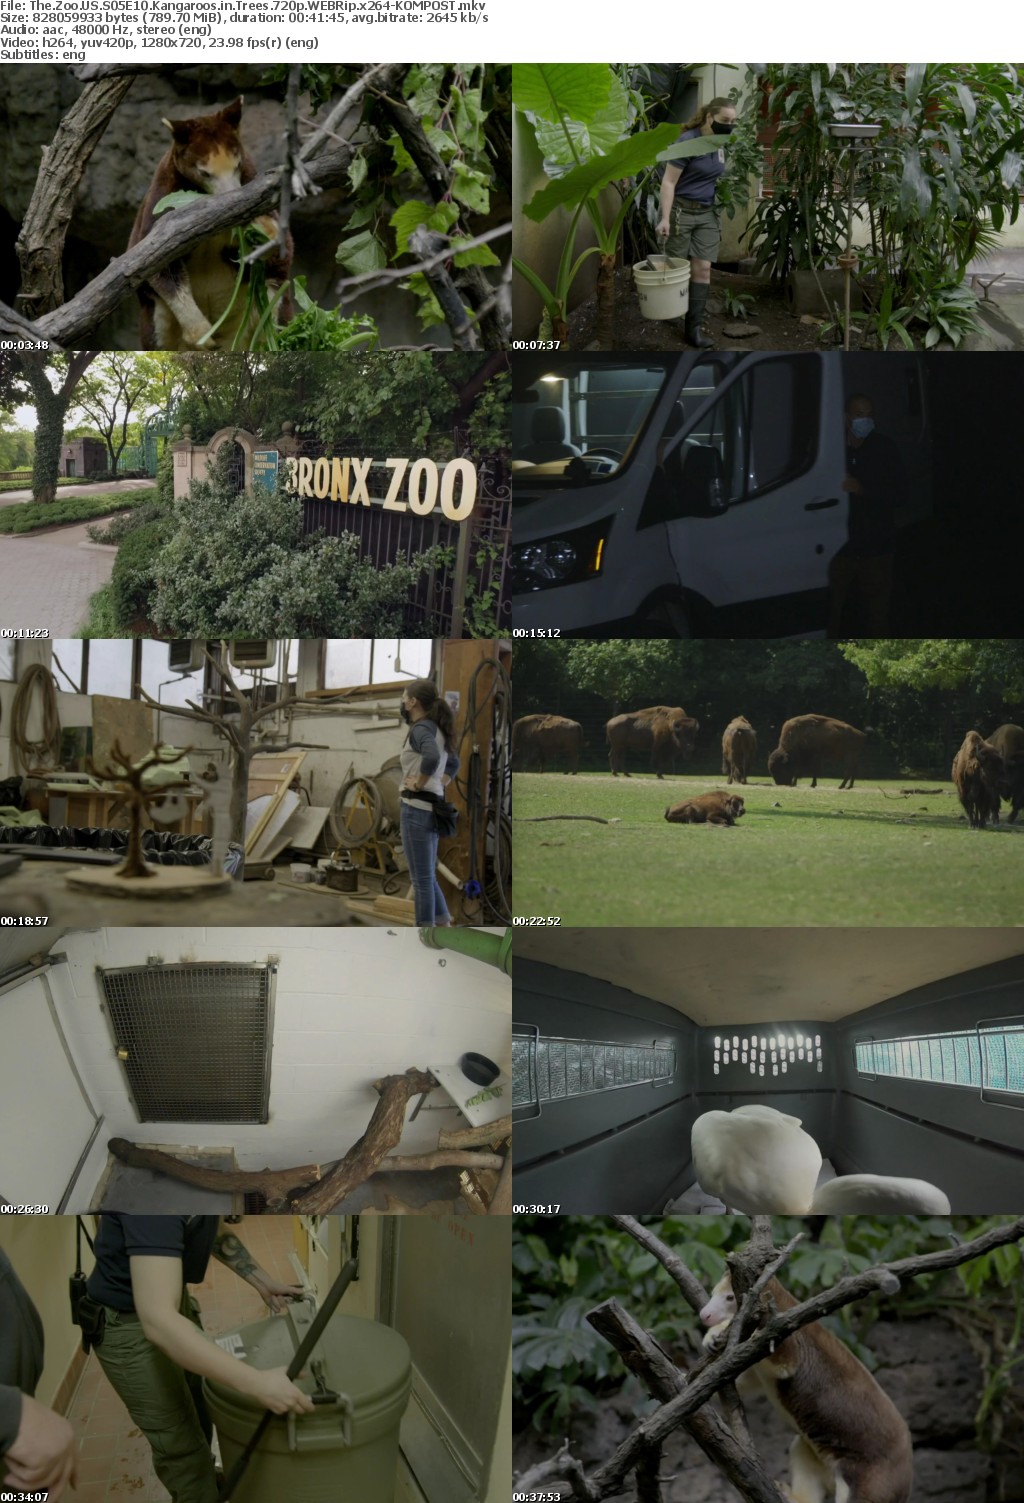 The Zoo US S05E10 Kangaroos in Trees 720p WEBRip x264-KOMPOST